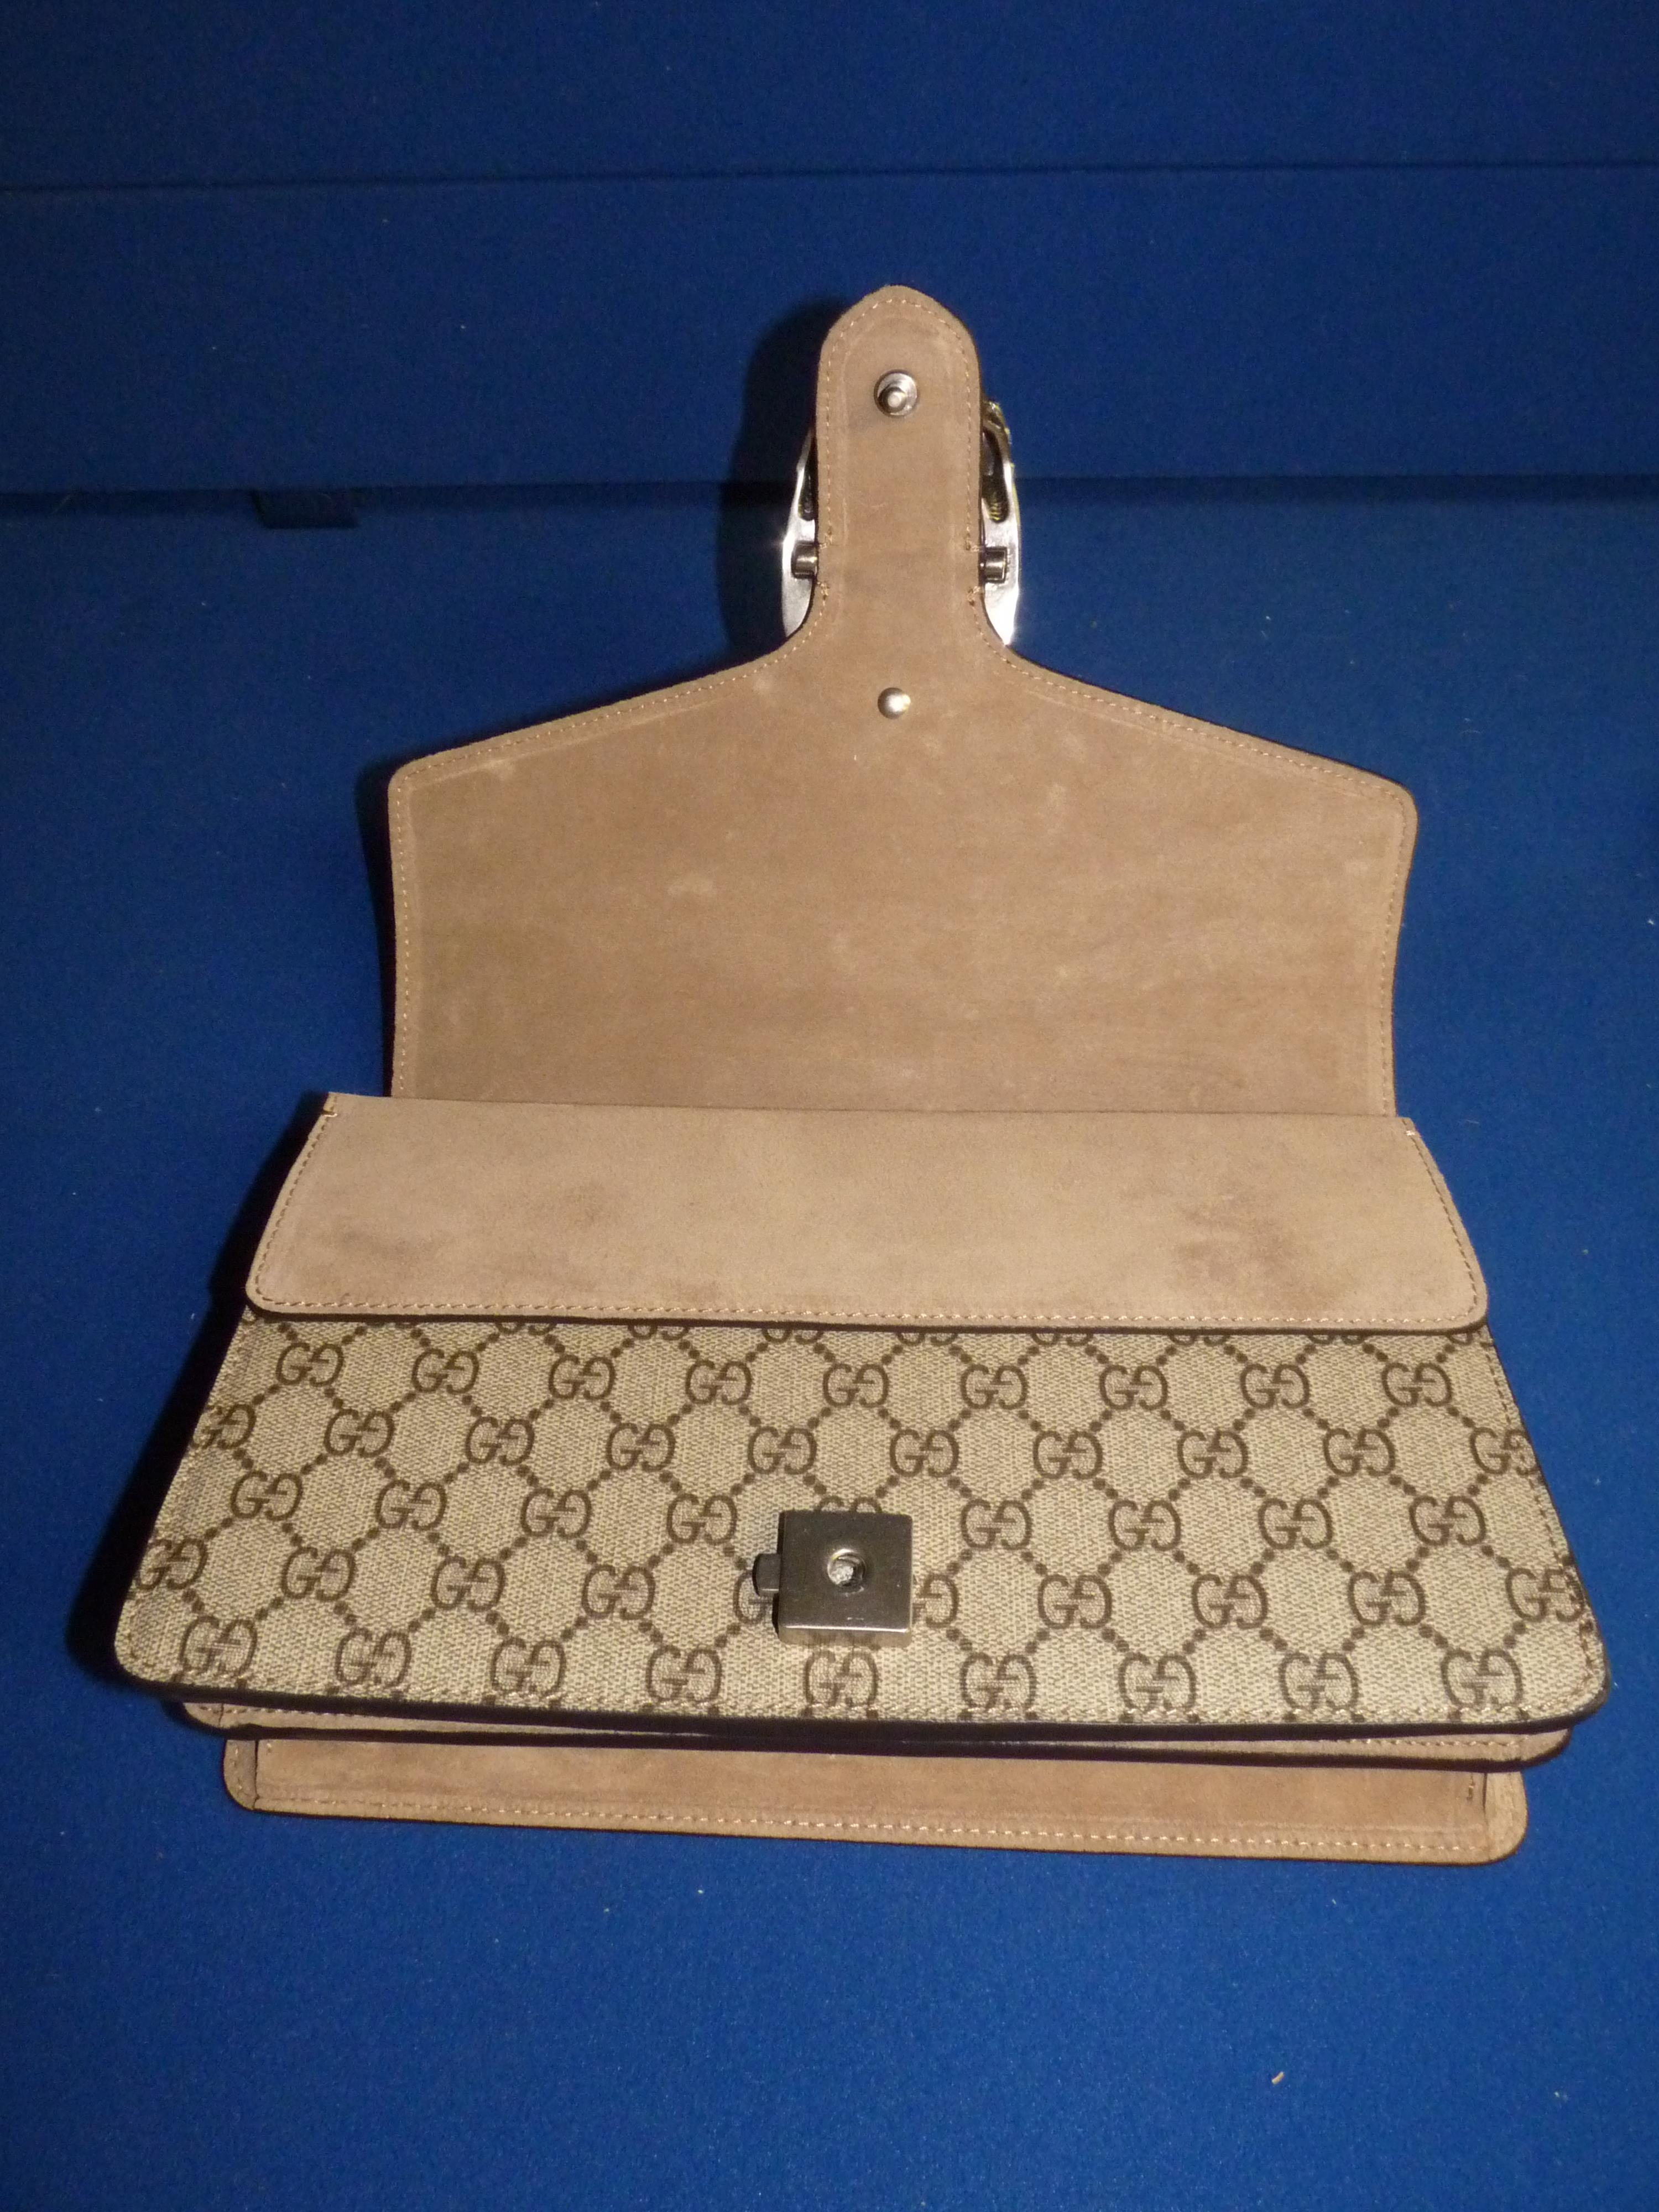 Gucci suede inner handbag - Image 4 of 6